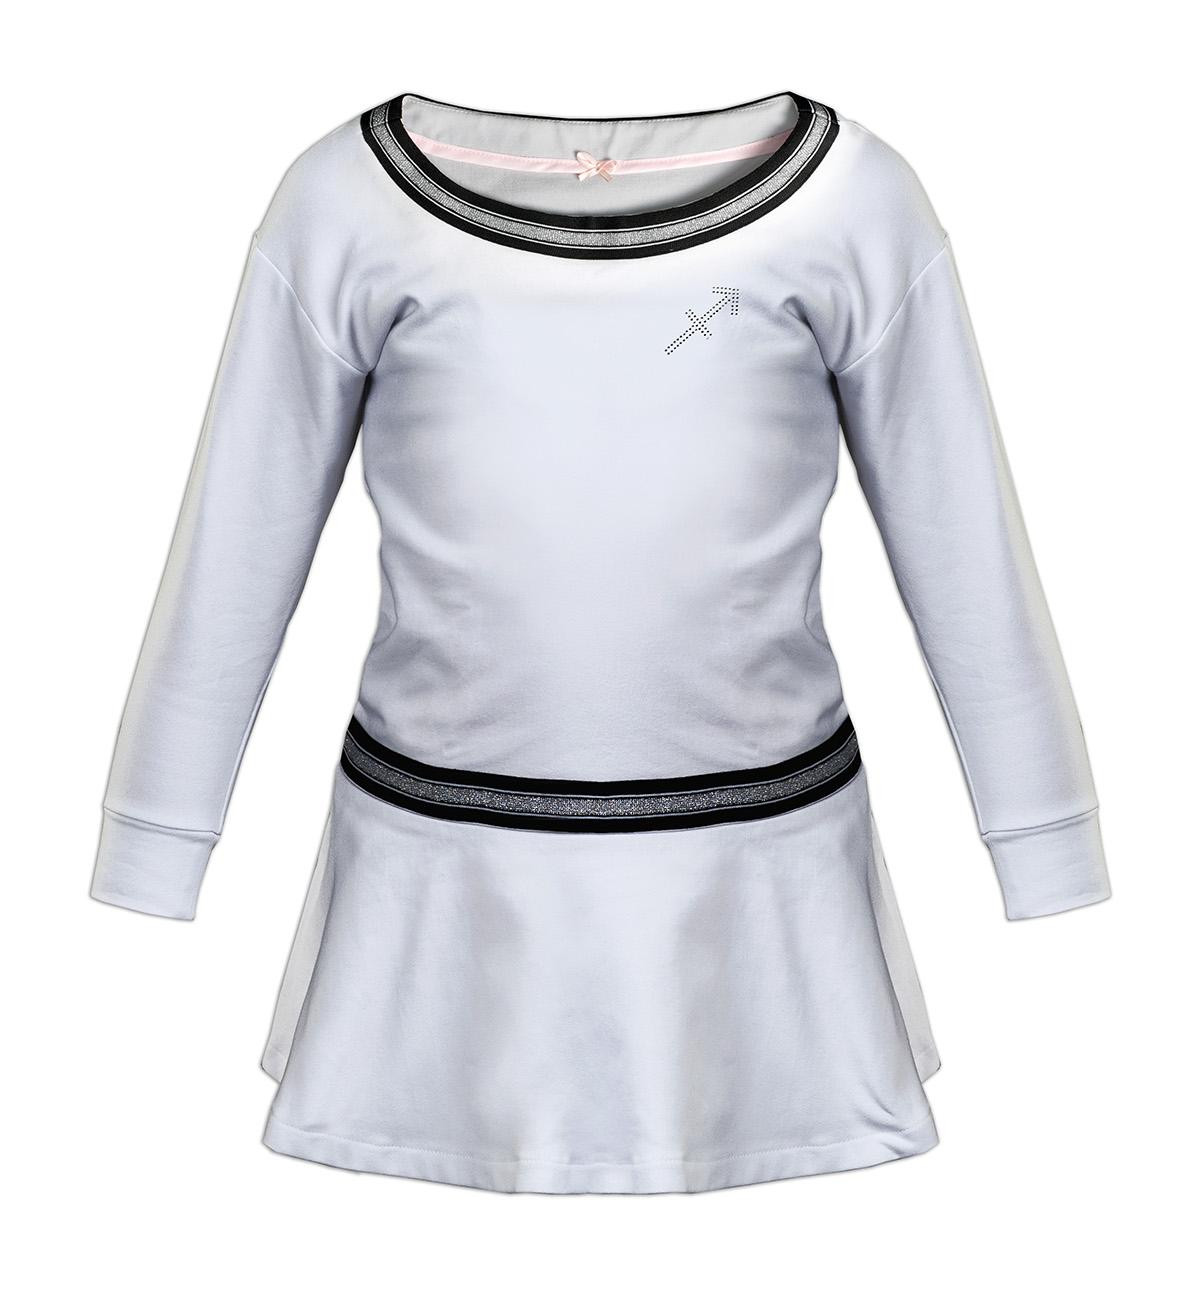 Peplum kid’s blouse with transfer rhinestones (ANGIE) - white 122-128 - sewing set